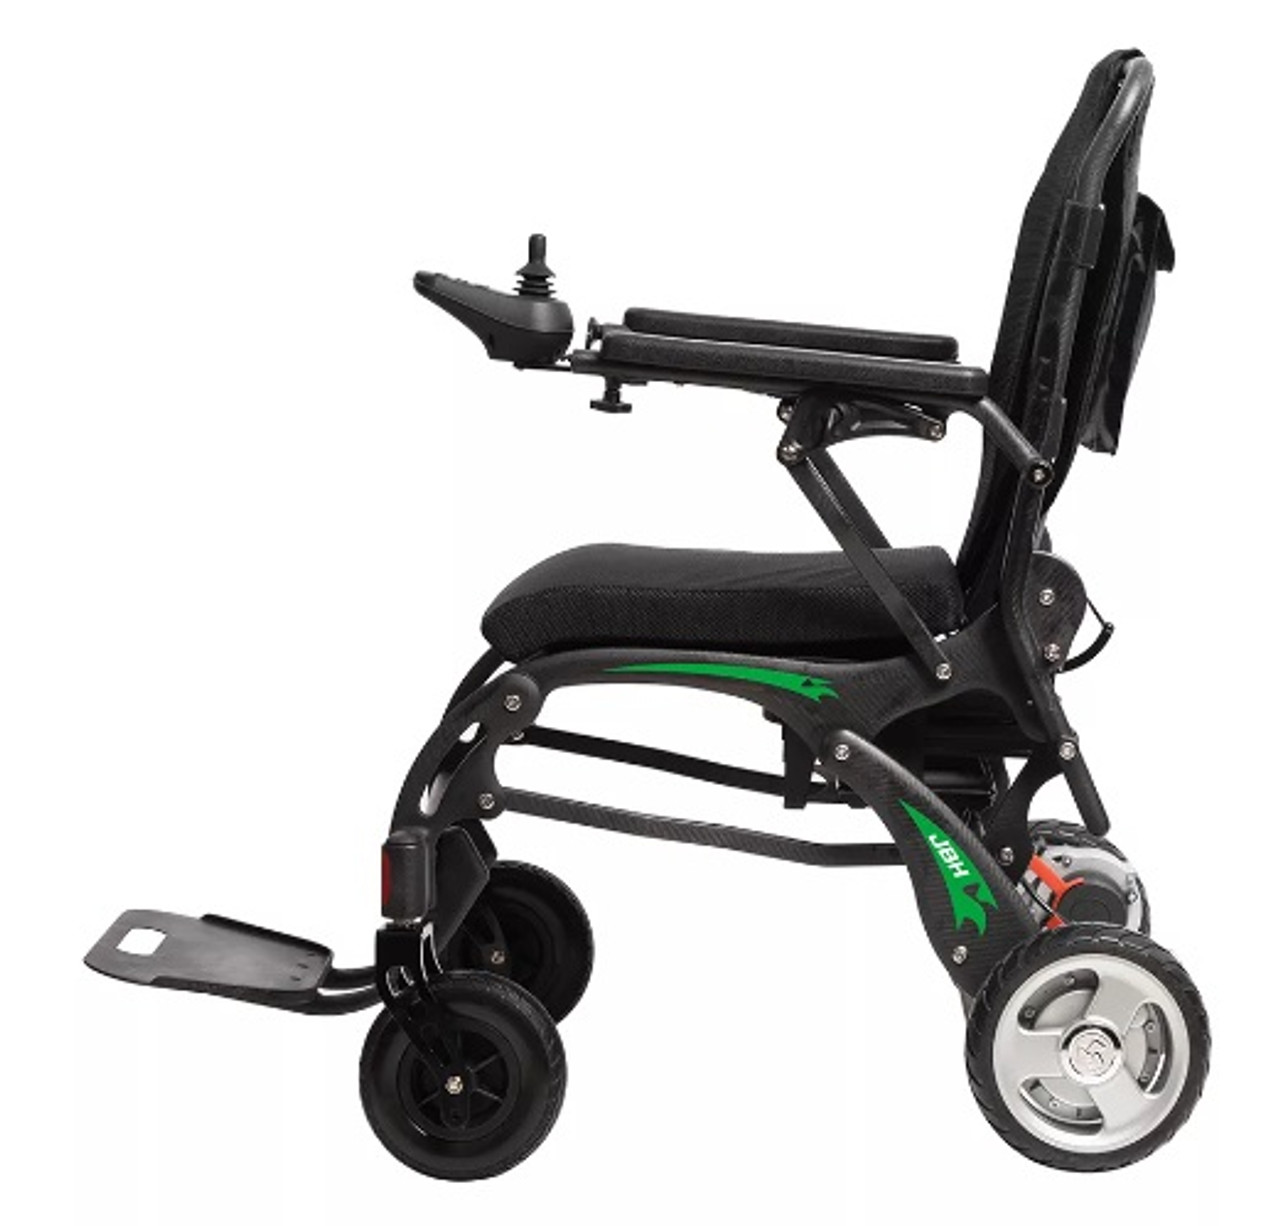 DC01 Lightweight Carbon Fiber Wheelchair, by JBH Medical